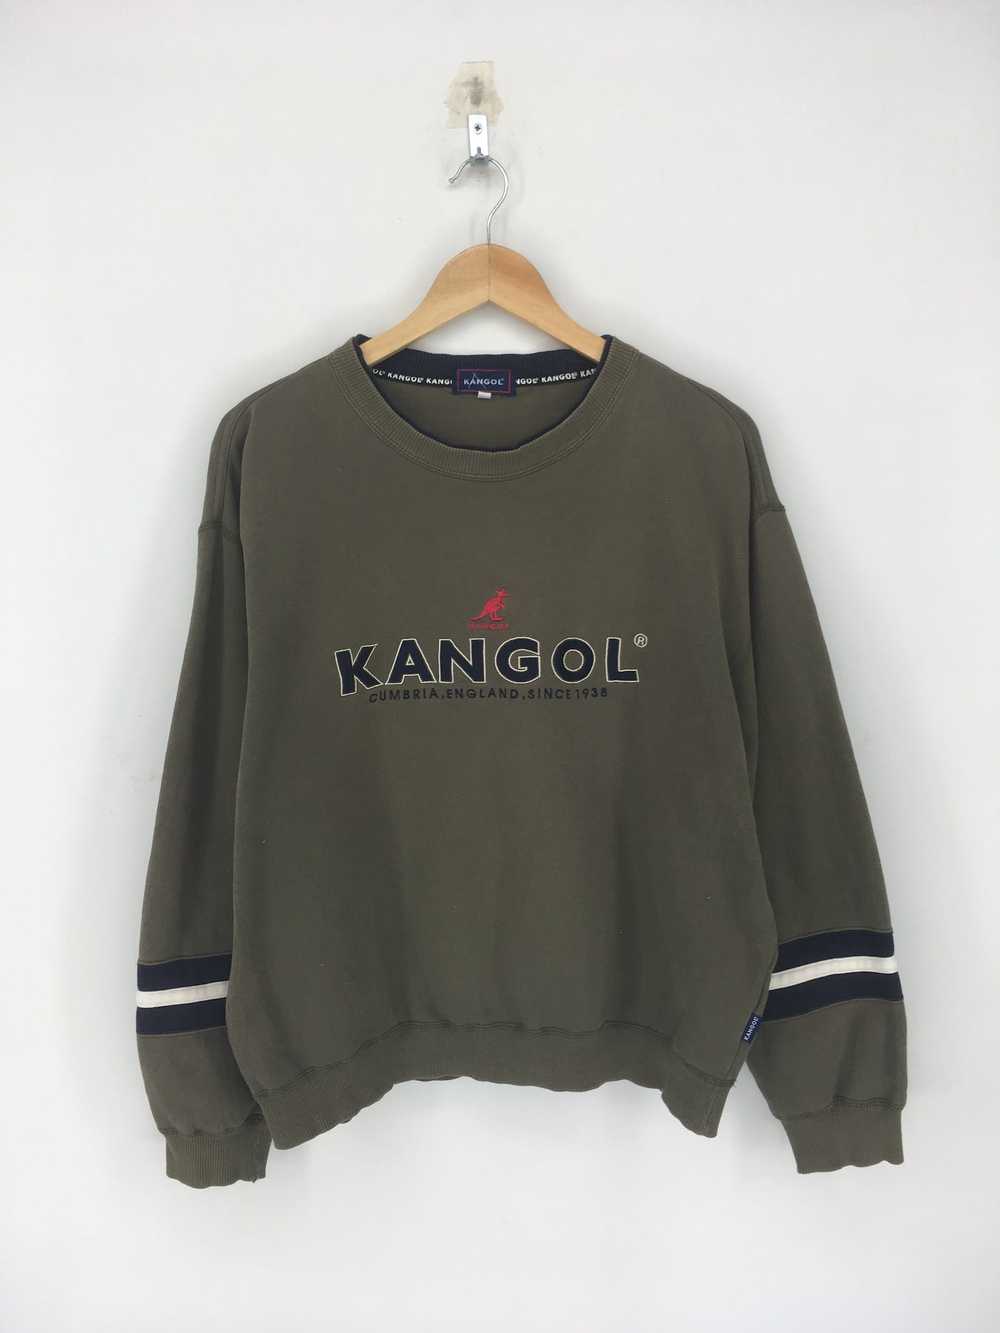 Kangol Vintage 90s KANGOL England Spell Out Sweat… - image 1